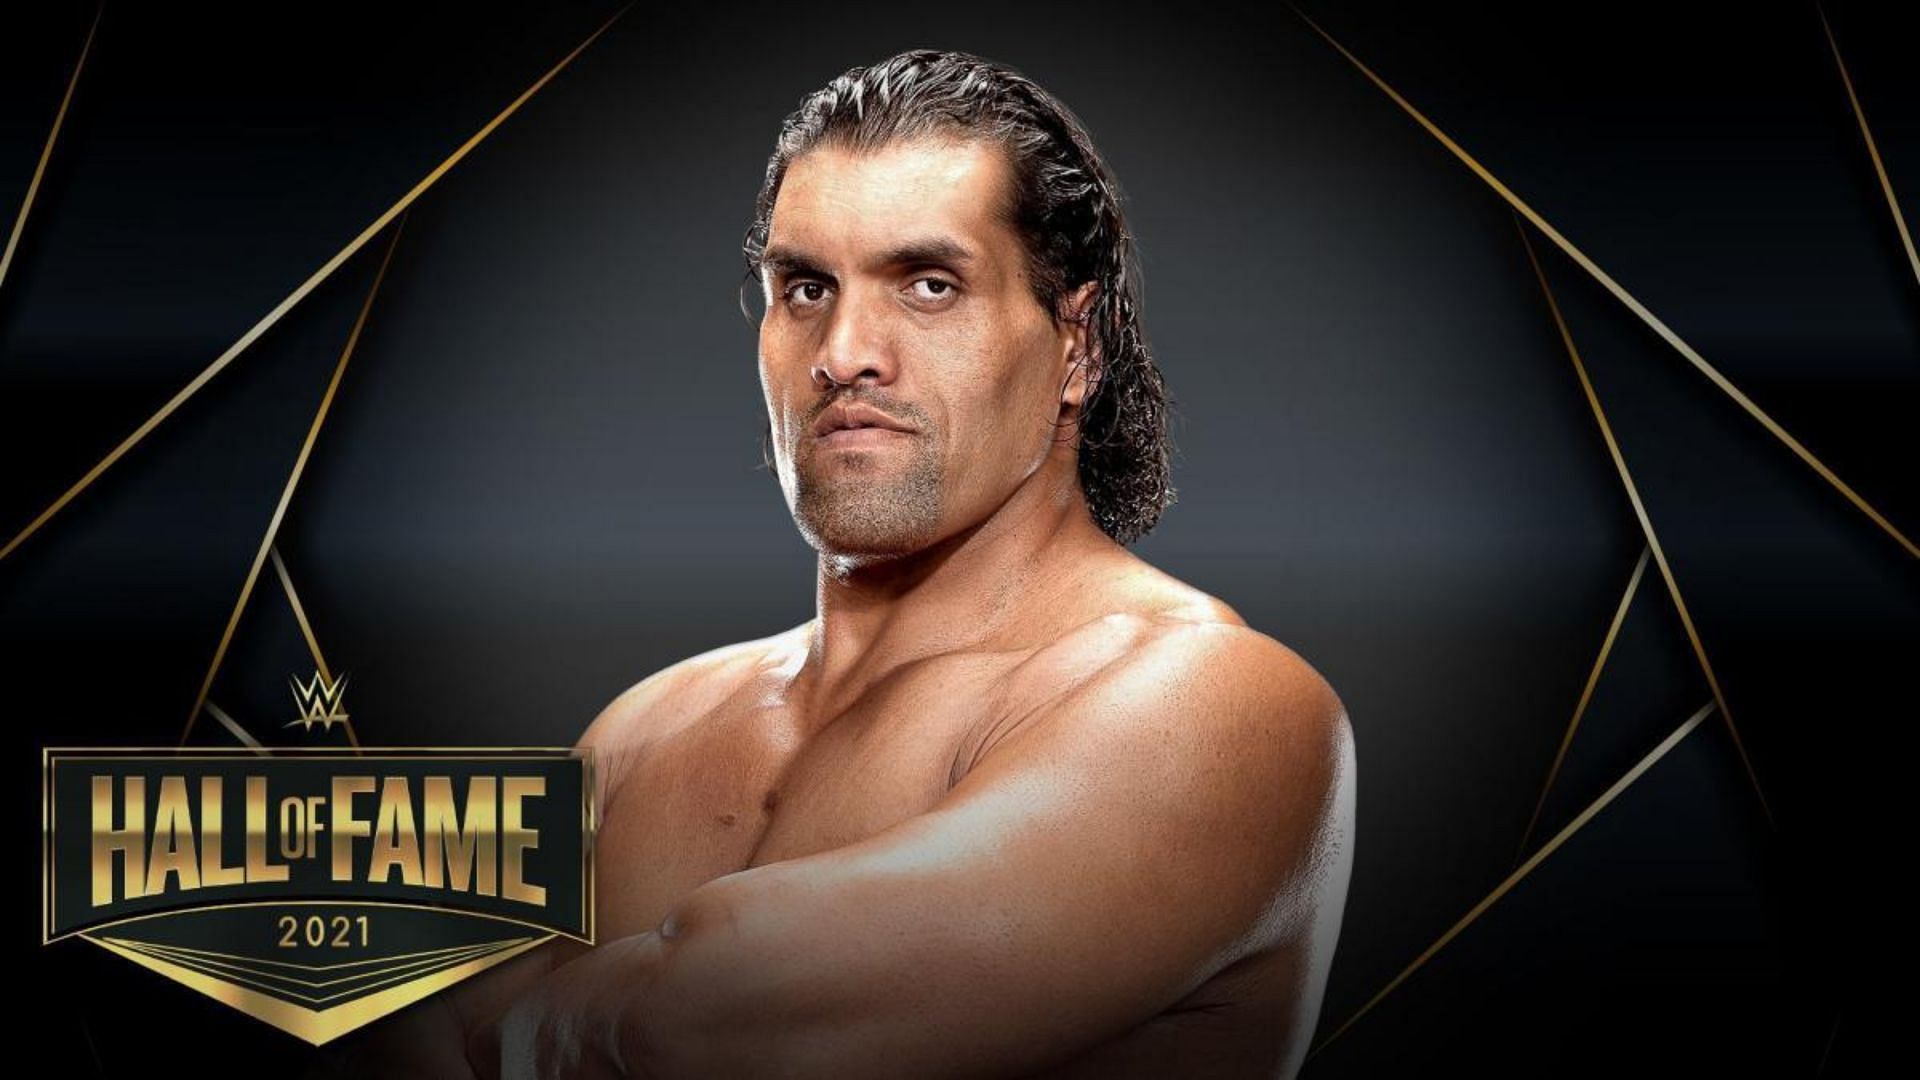 WWE Hall of Famer The Great Khali